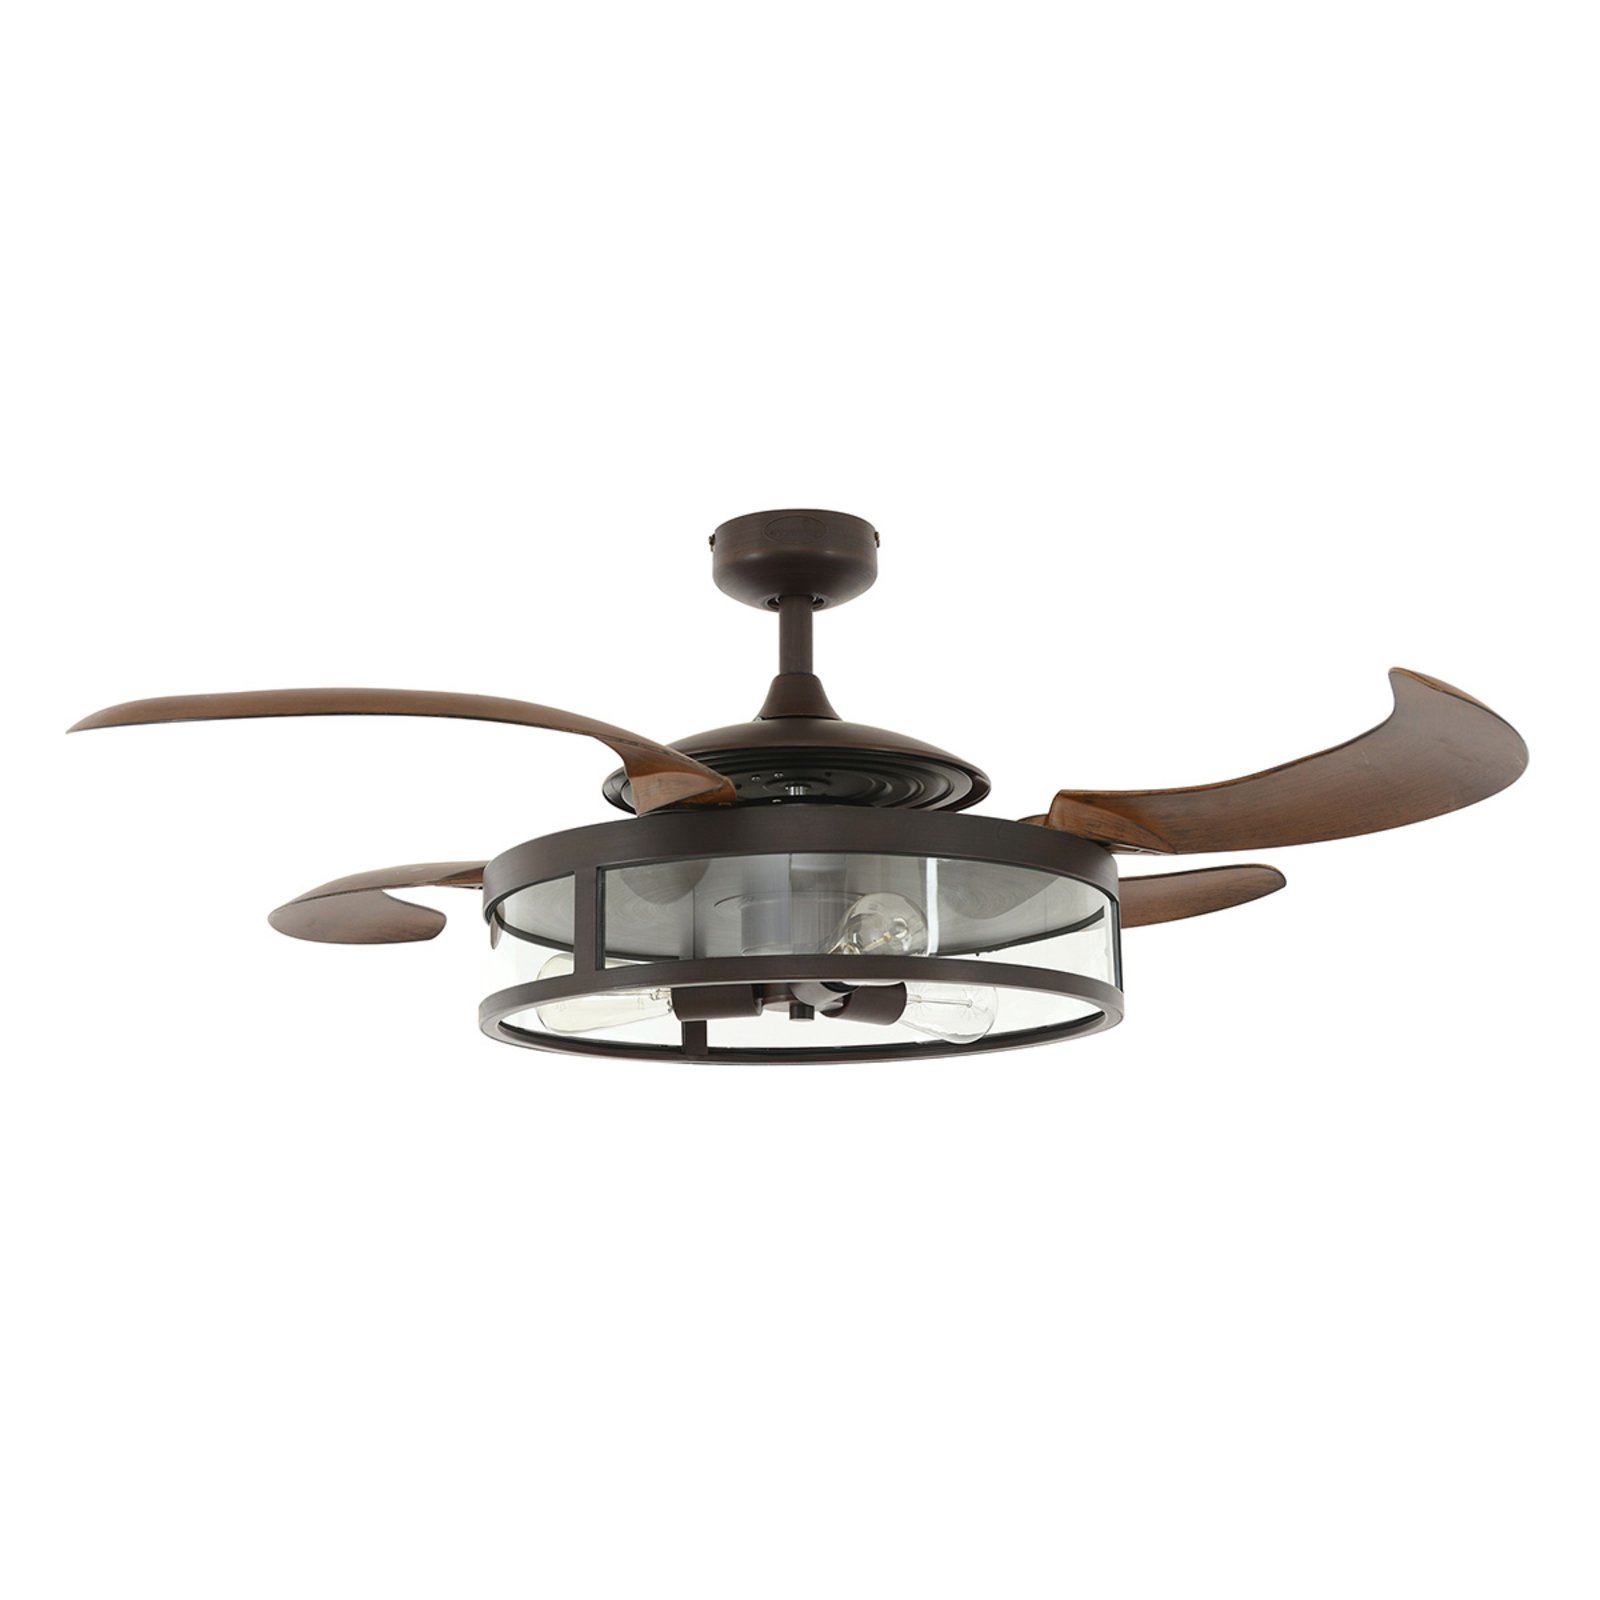 Fanaway Classic ceiling fan with light, bronze